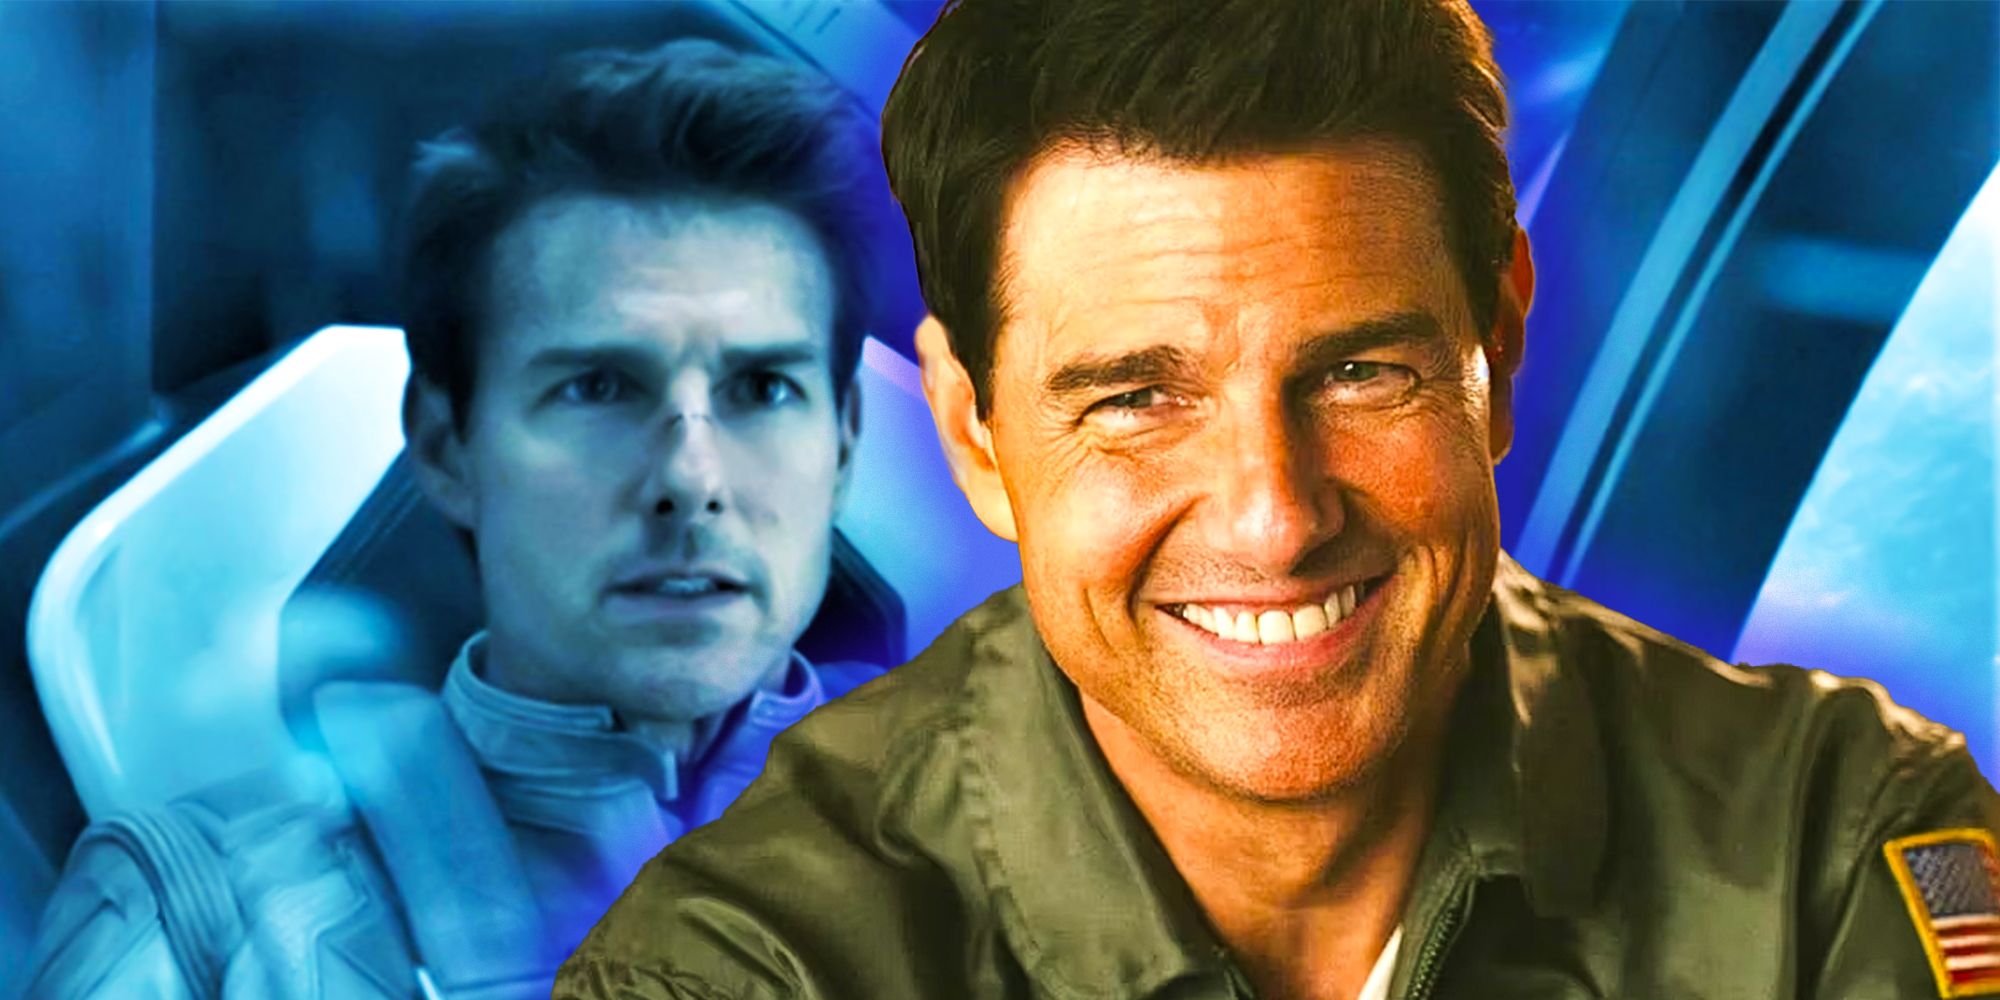 Tom Cruise in Oblivion flying alongside Cruise in Top Gun Maverick smiling